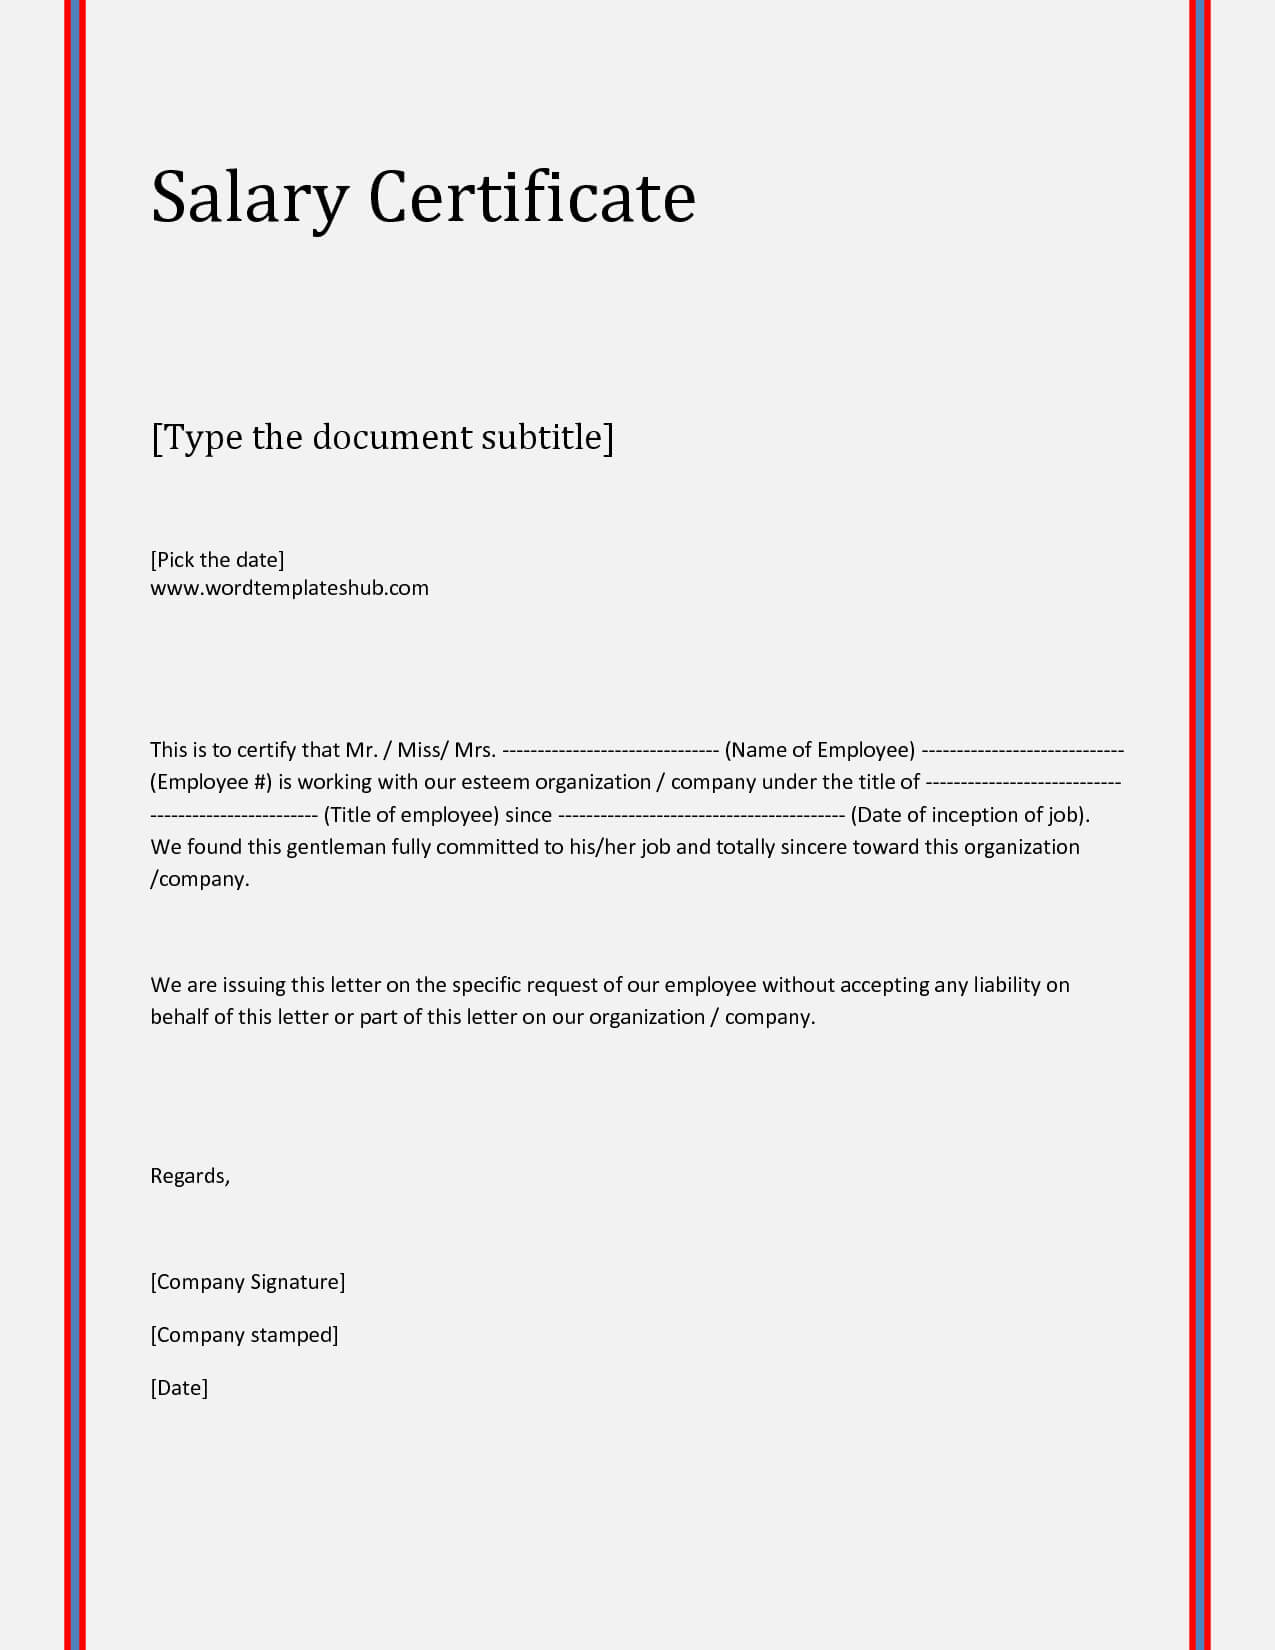 Salary Certificate Sampe 39641 | Certificate Templates Regarding Practical Completion Certificate Template Uk